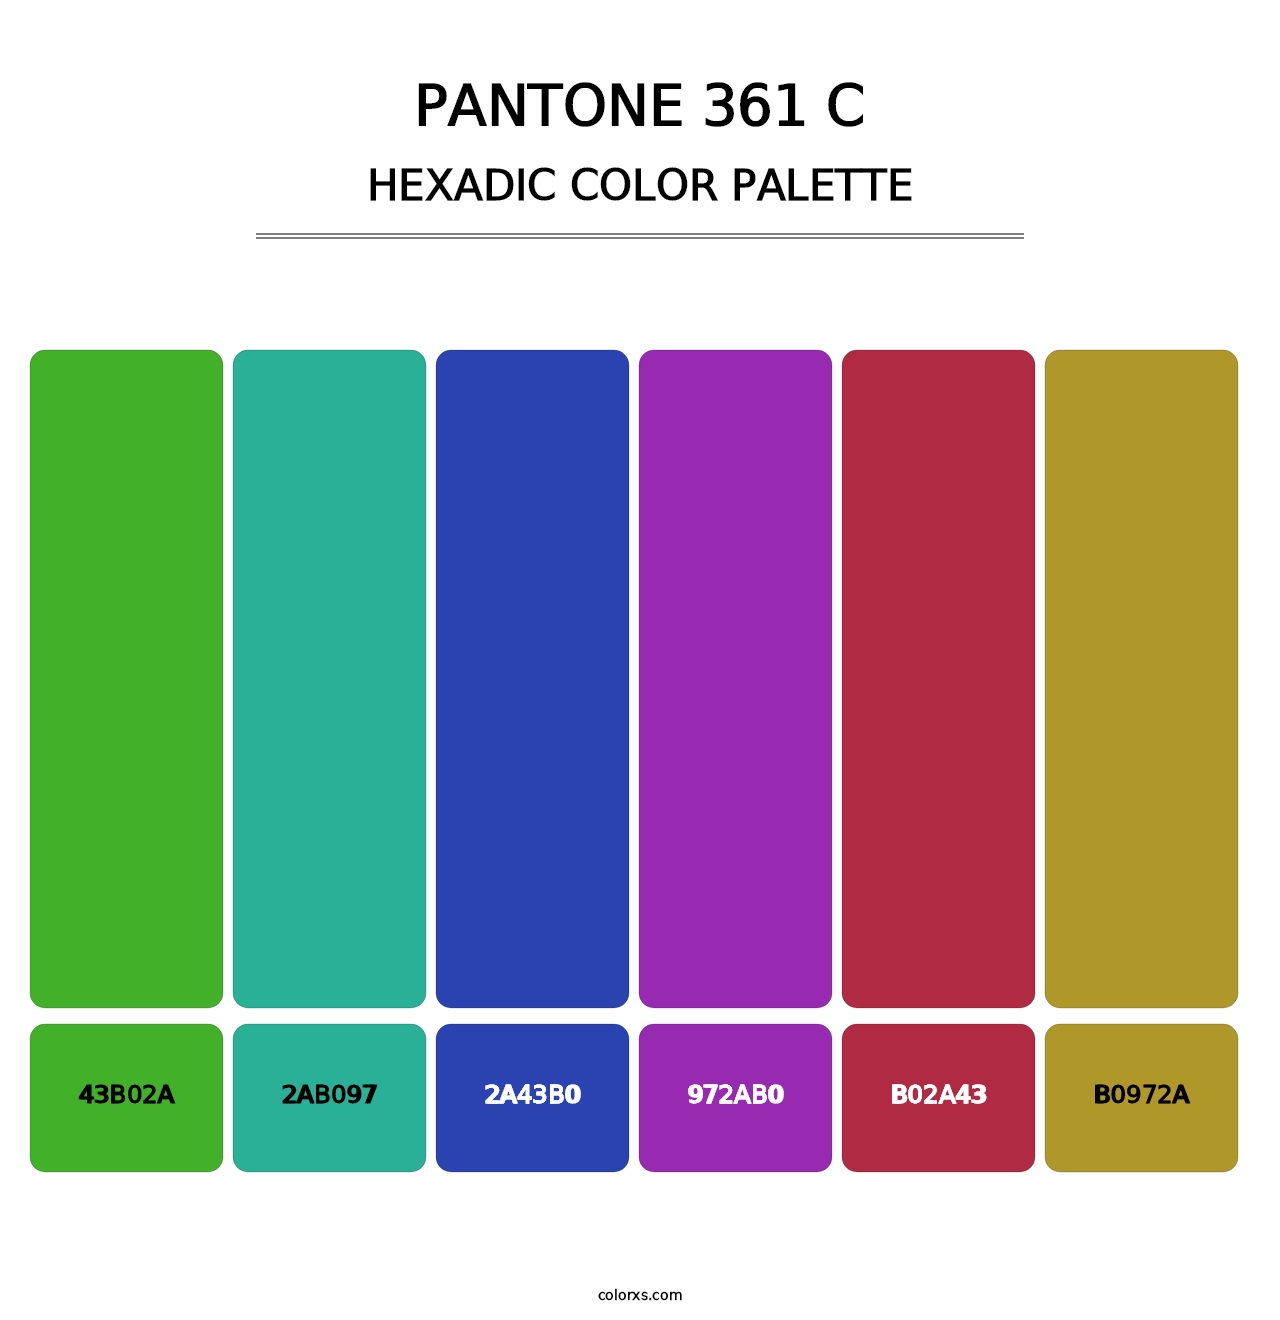 PANTONE 361 C - Hexadic Color Palette